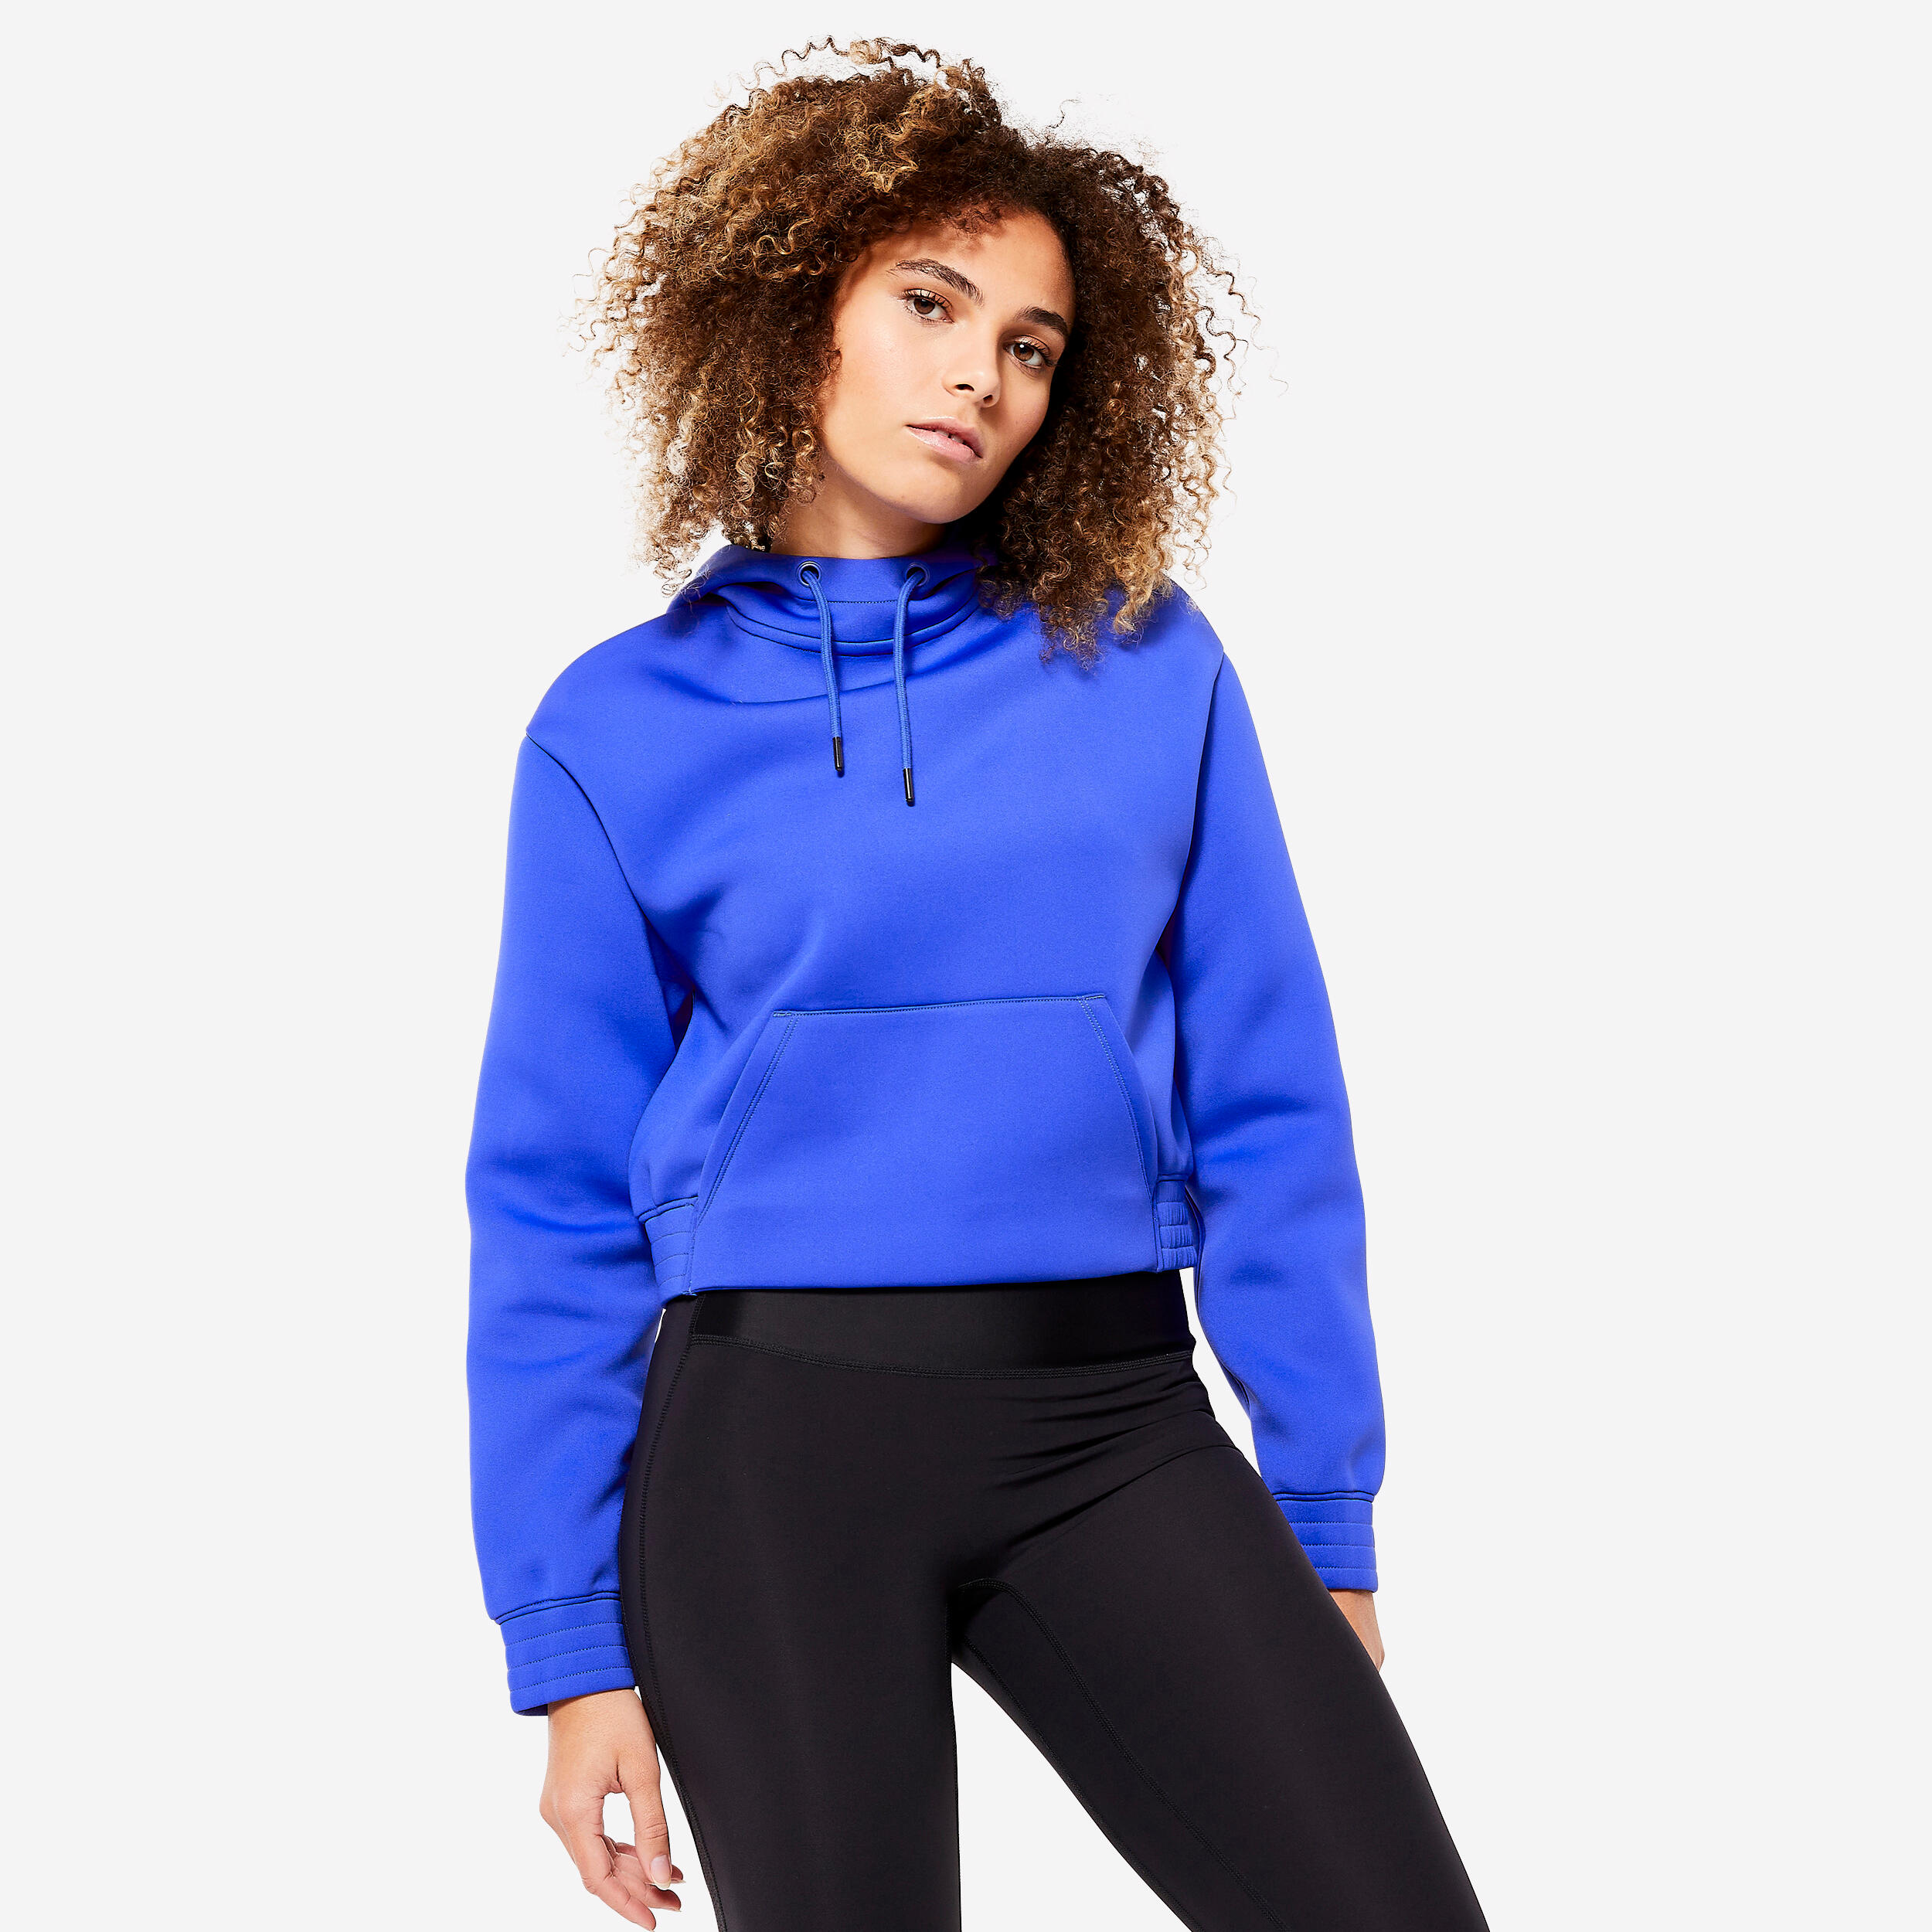 Cropped Cut Fitness Cardio Hooded Sweatshirt - Blue 1/7